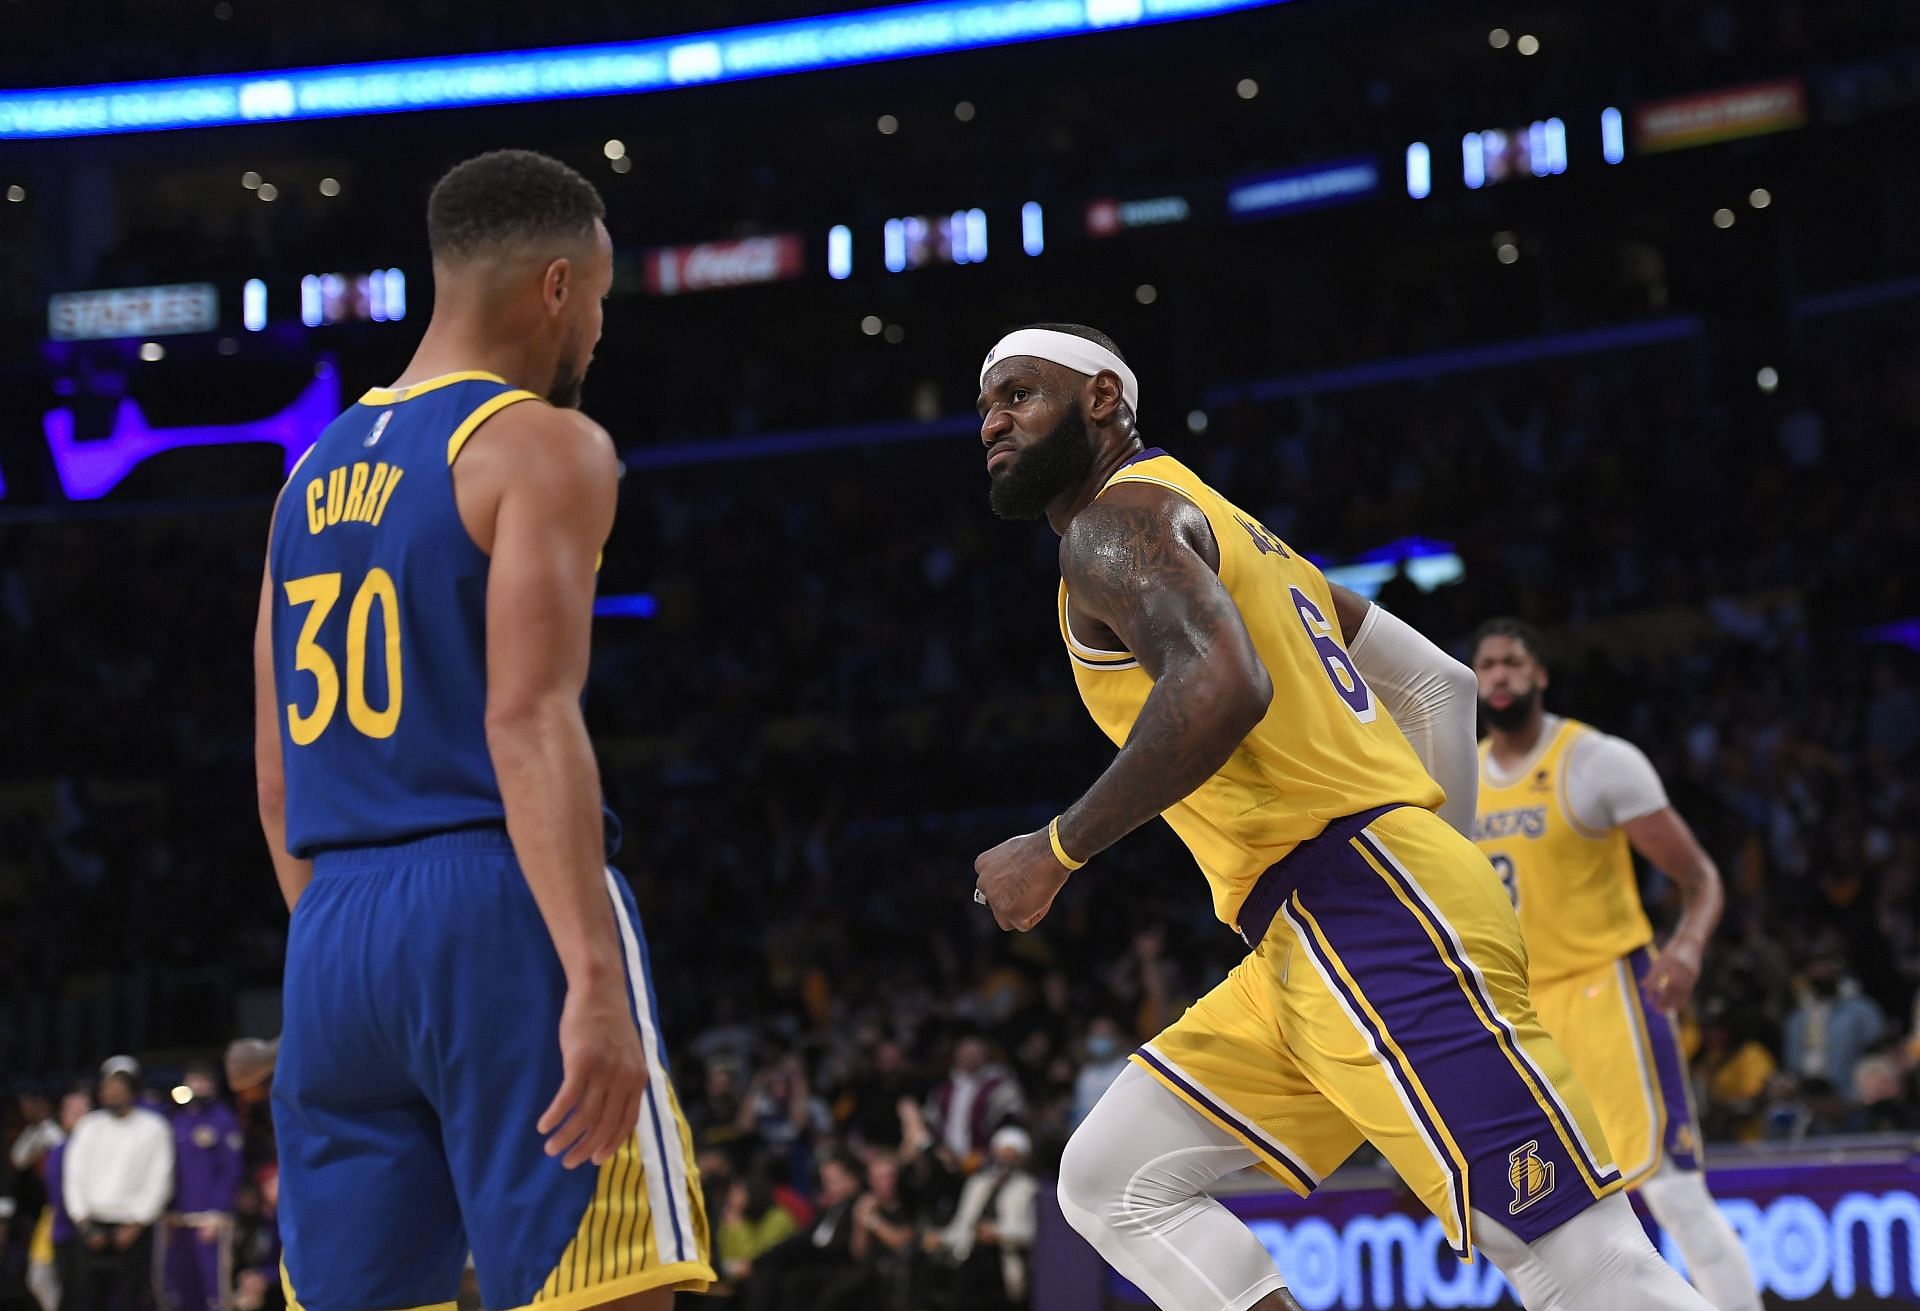 NBA superstars Steph Curry and LeBron James